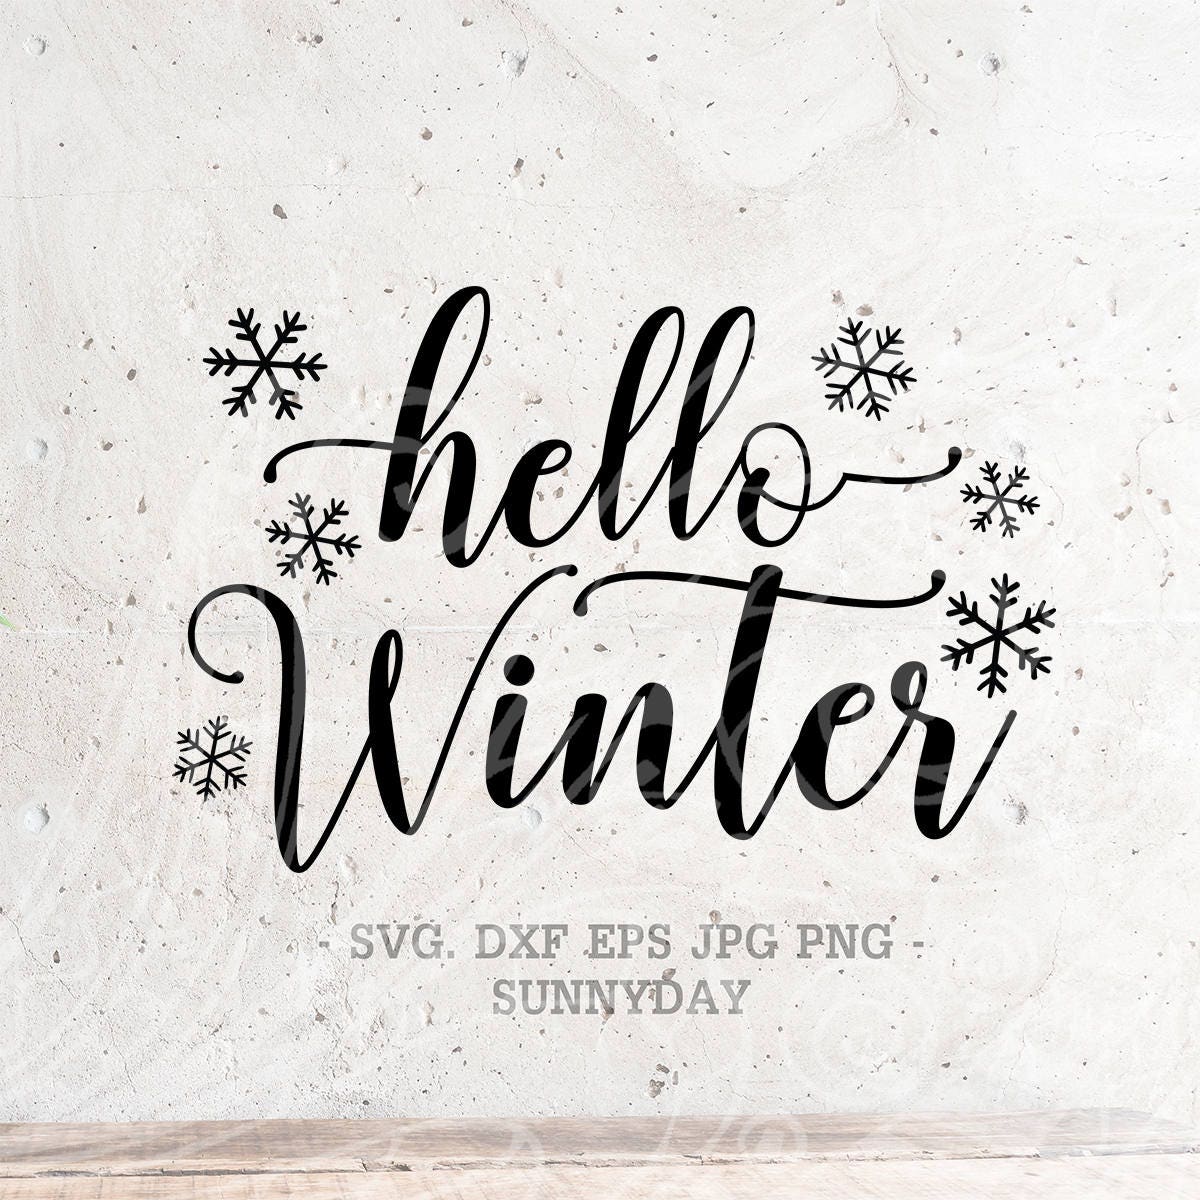 Hello Winter Vibes Sticker for Sale by swietenia